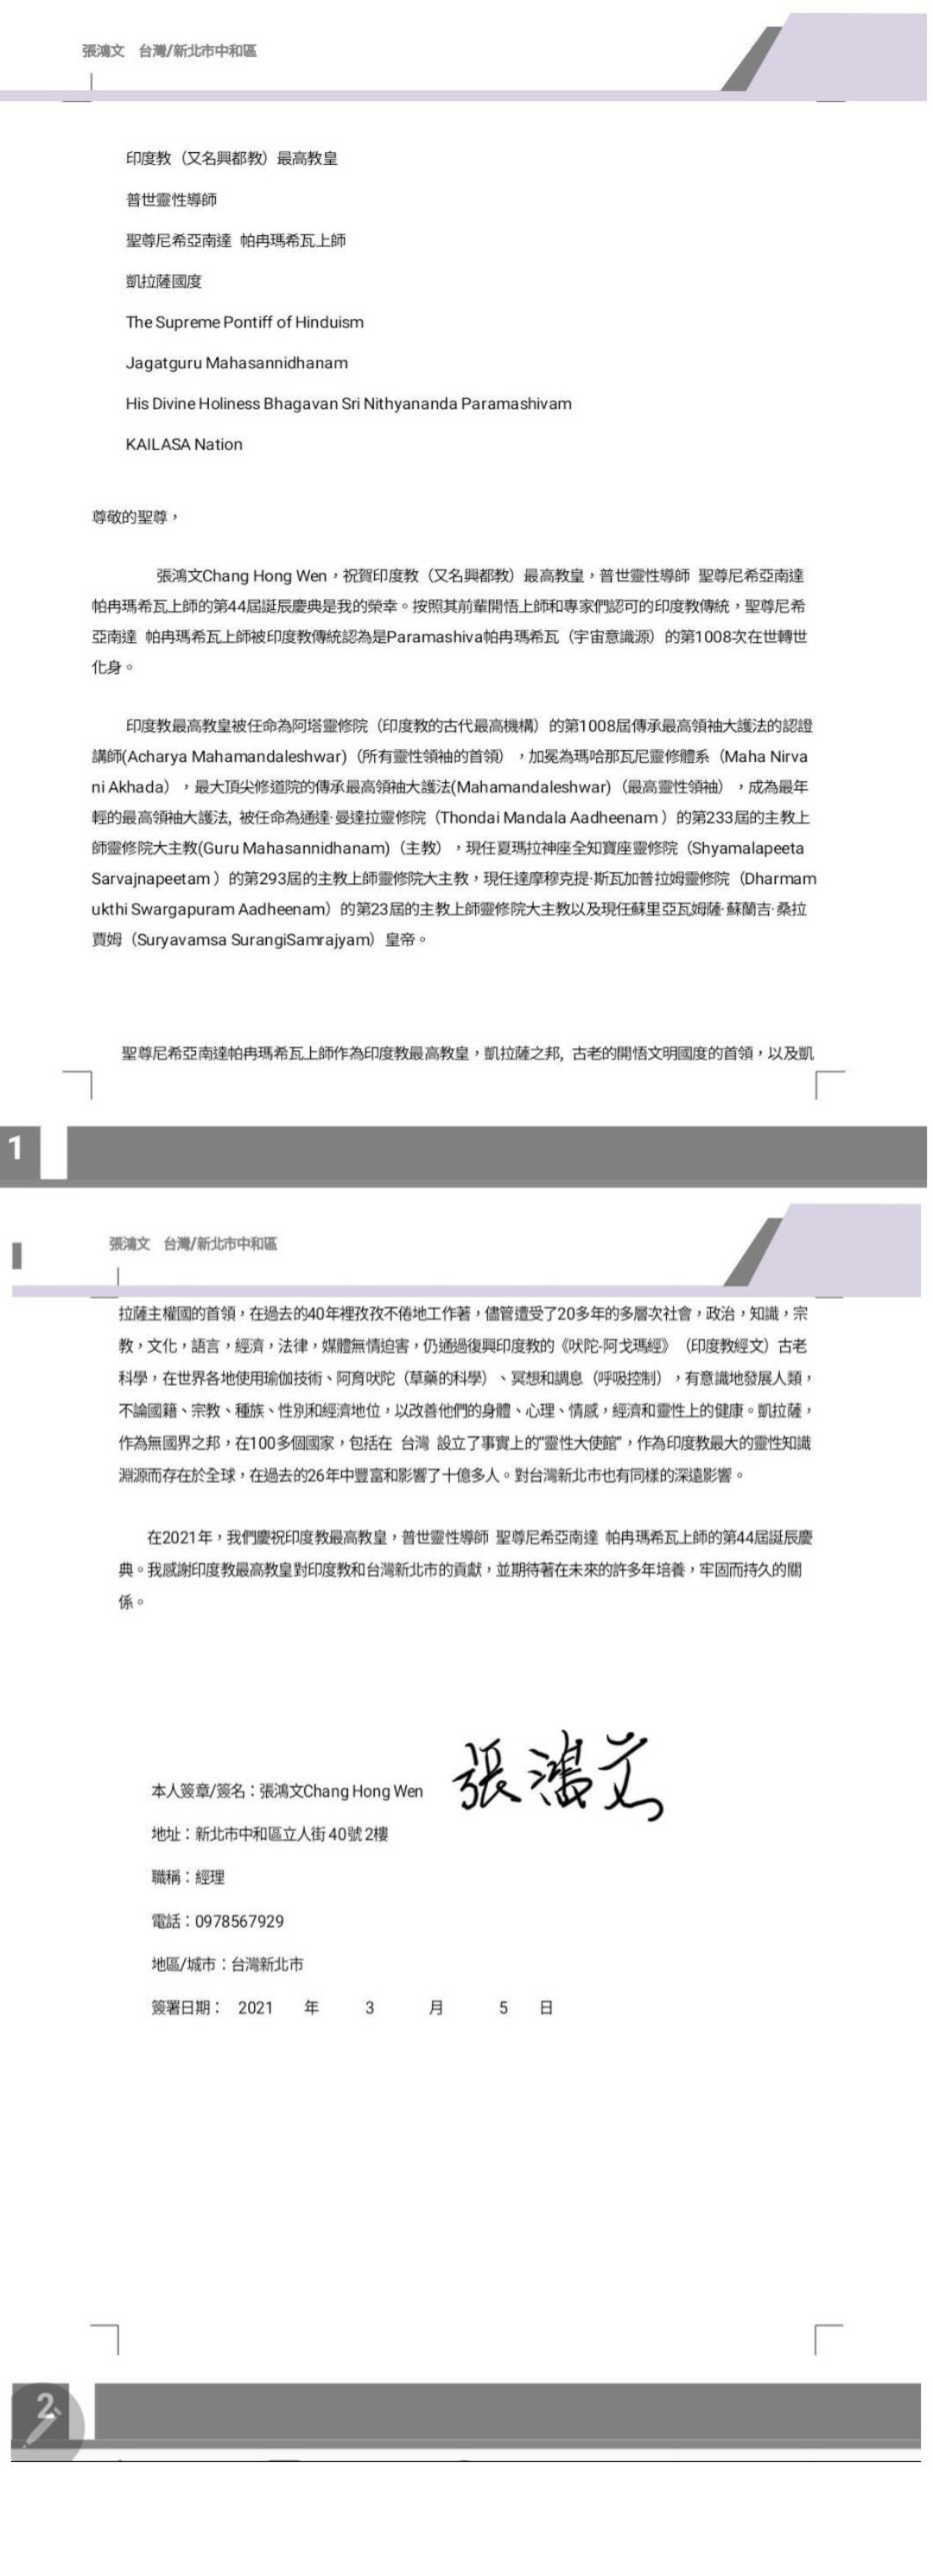 -Taiwan---Chang-Hong-Wen---Mar-5---2021-(Proclamation)-1paDKH6xKqcQB6C1o64w9KfxkYg-XjA-j.pdf